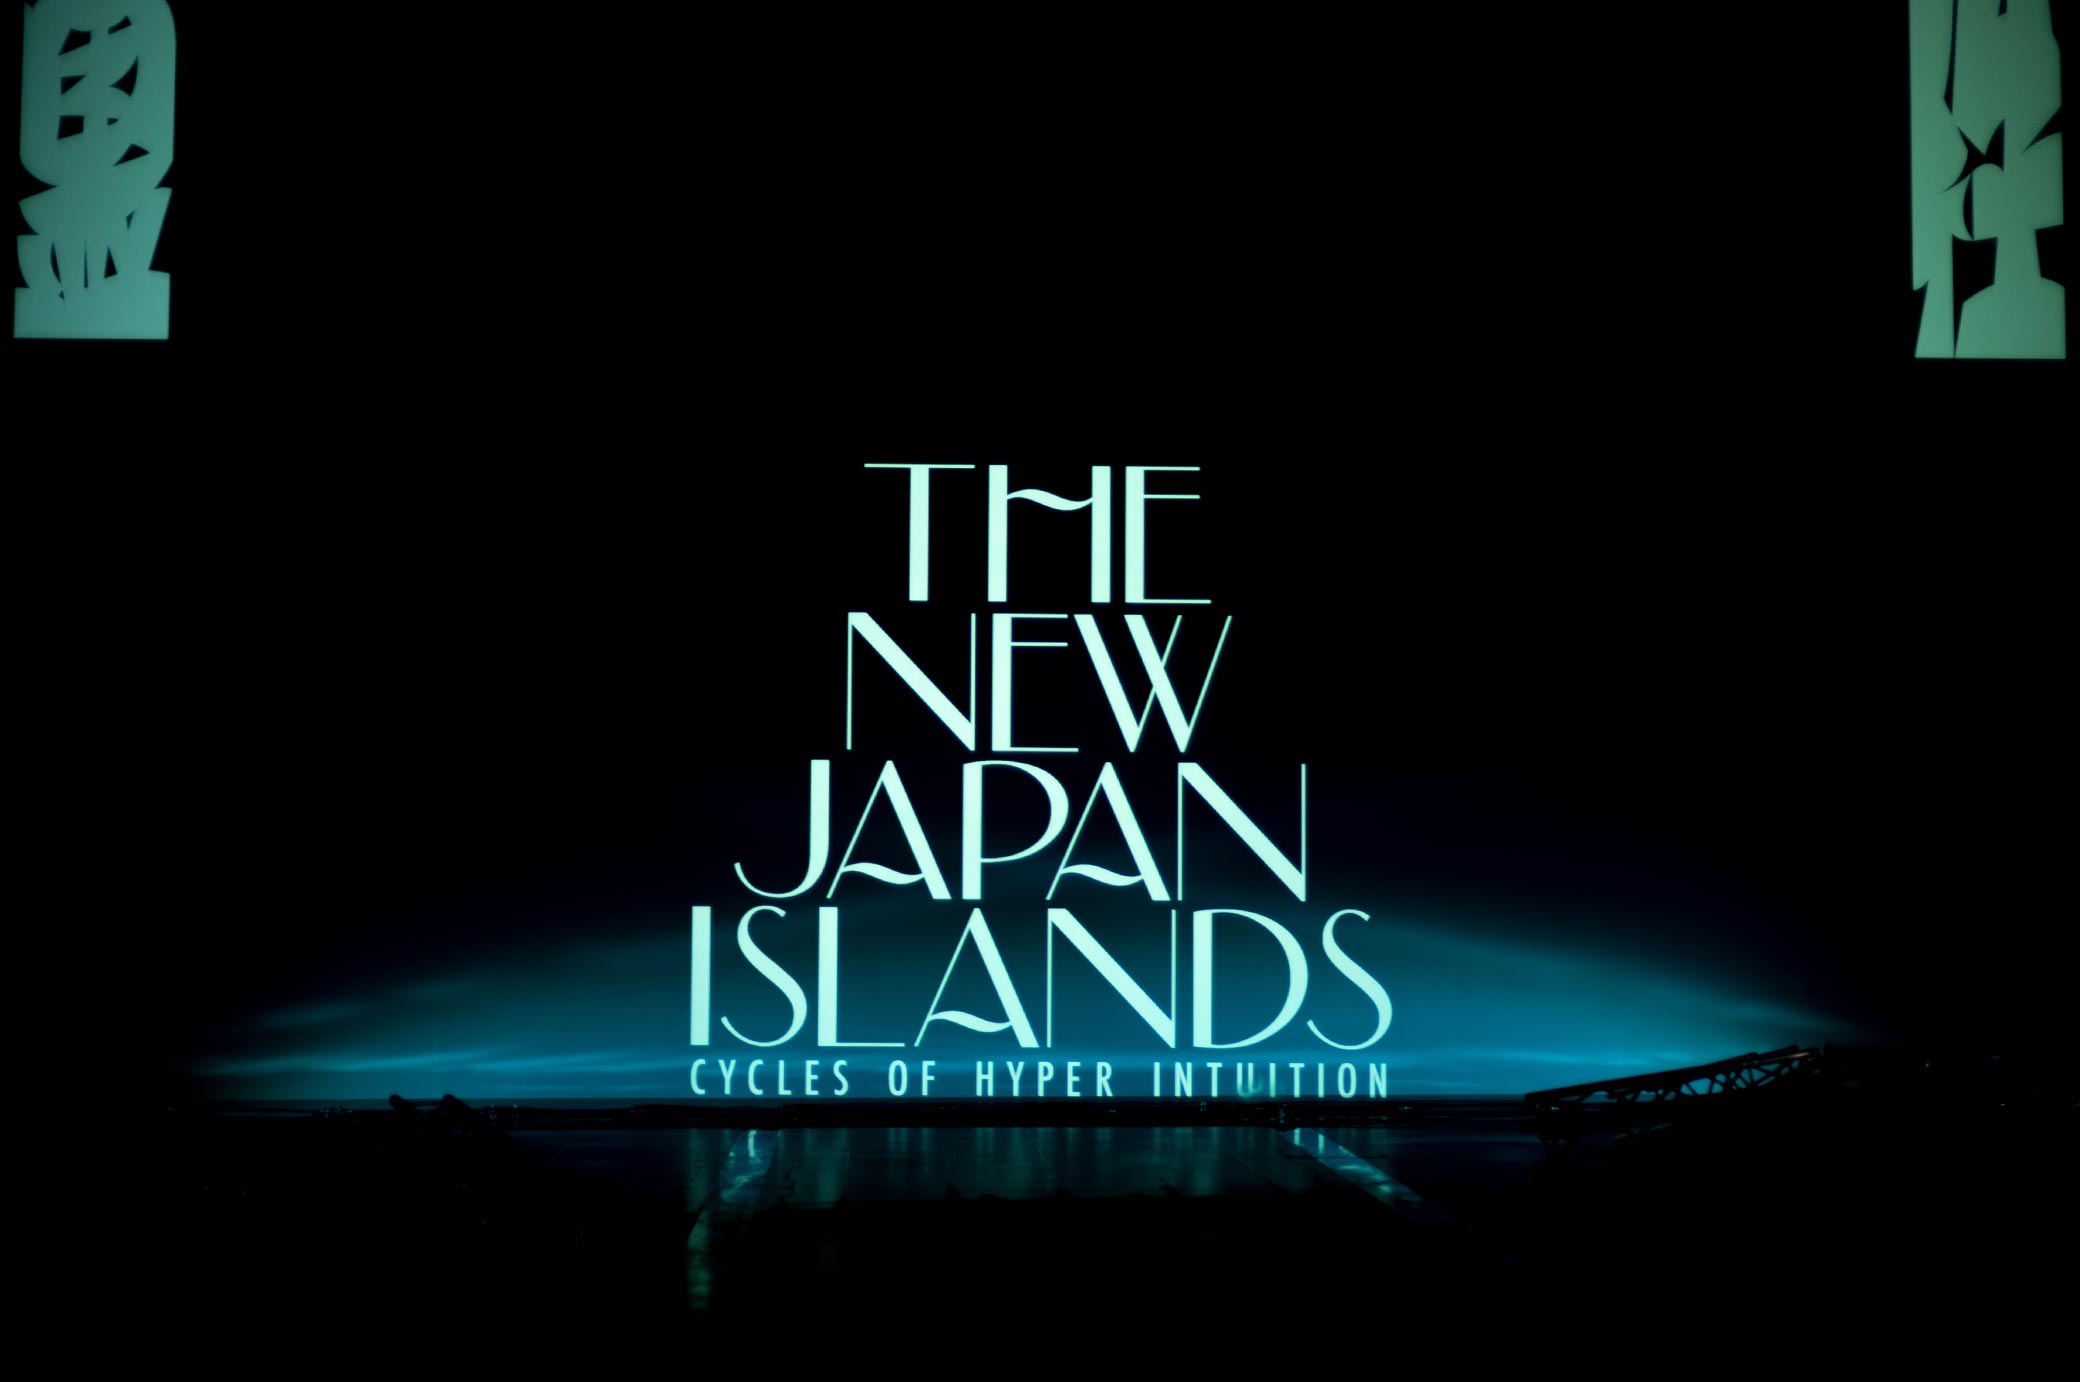 SXSW2020 The New Japan Islands 2020のキービジュアル